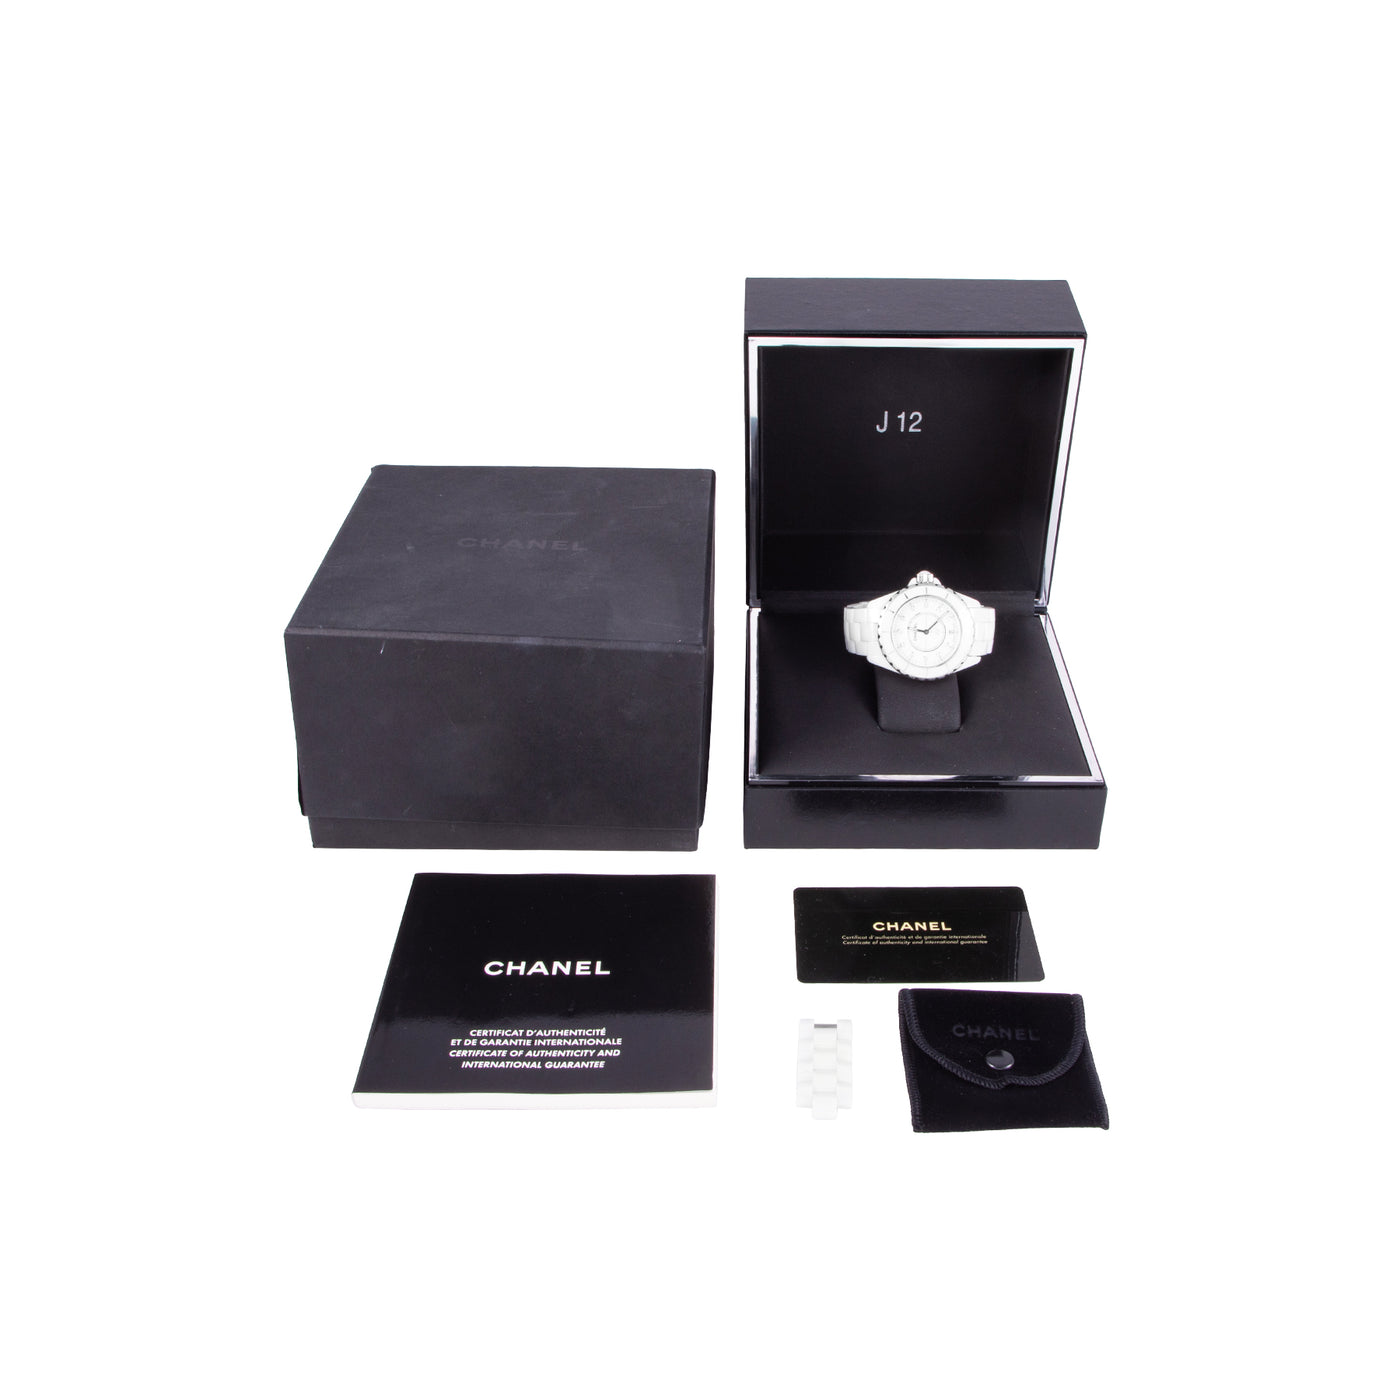 Chanel J12 H2125 full set | Timepiece360